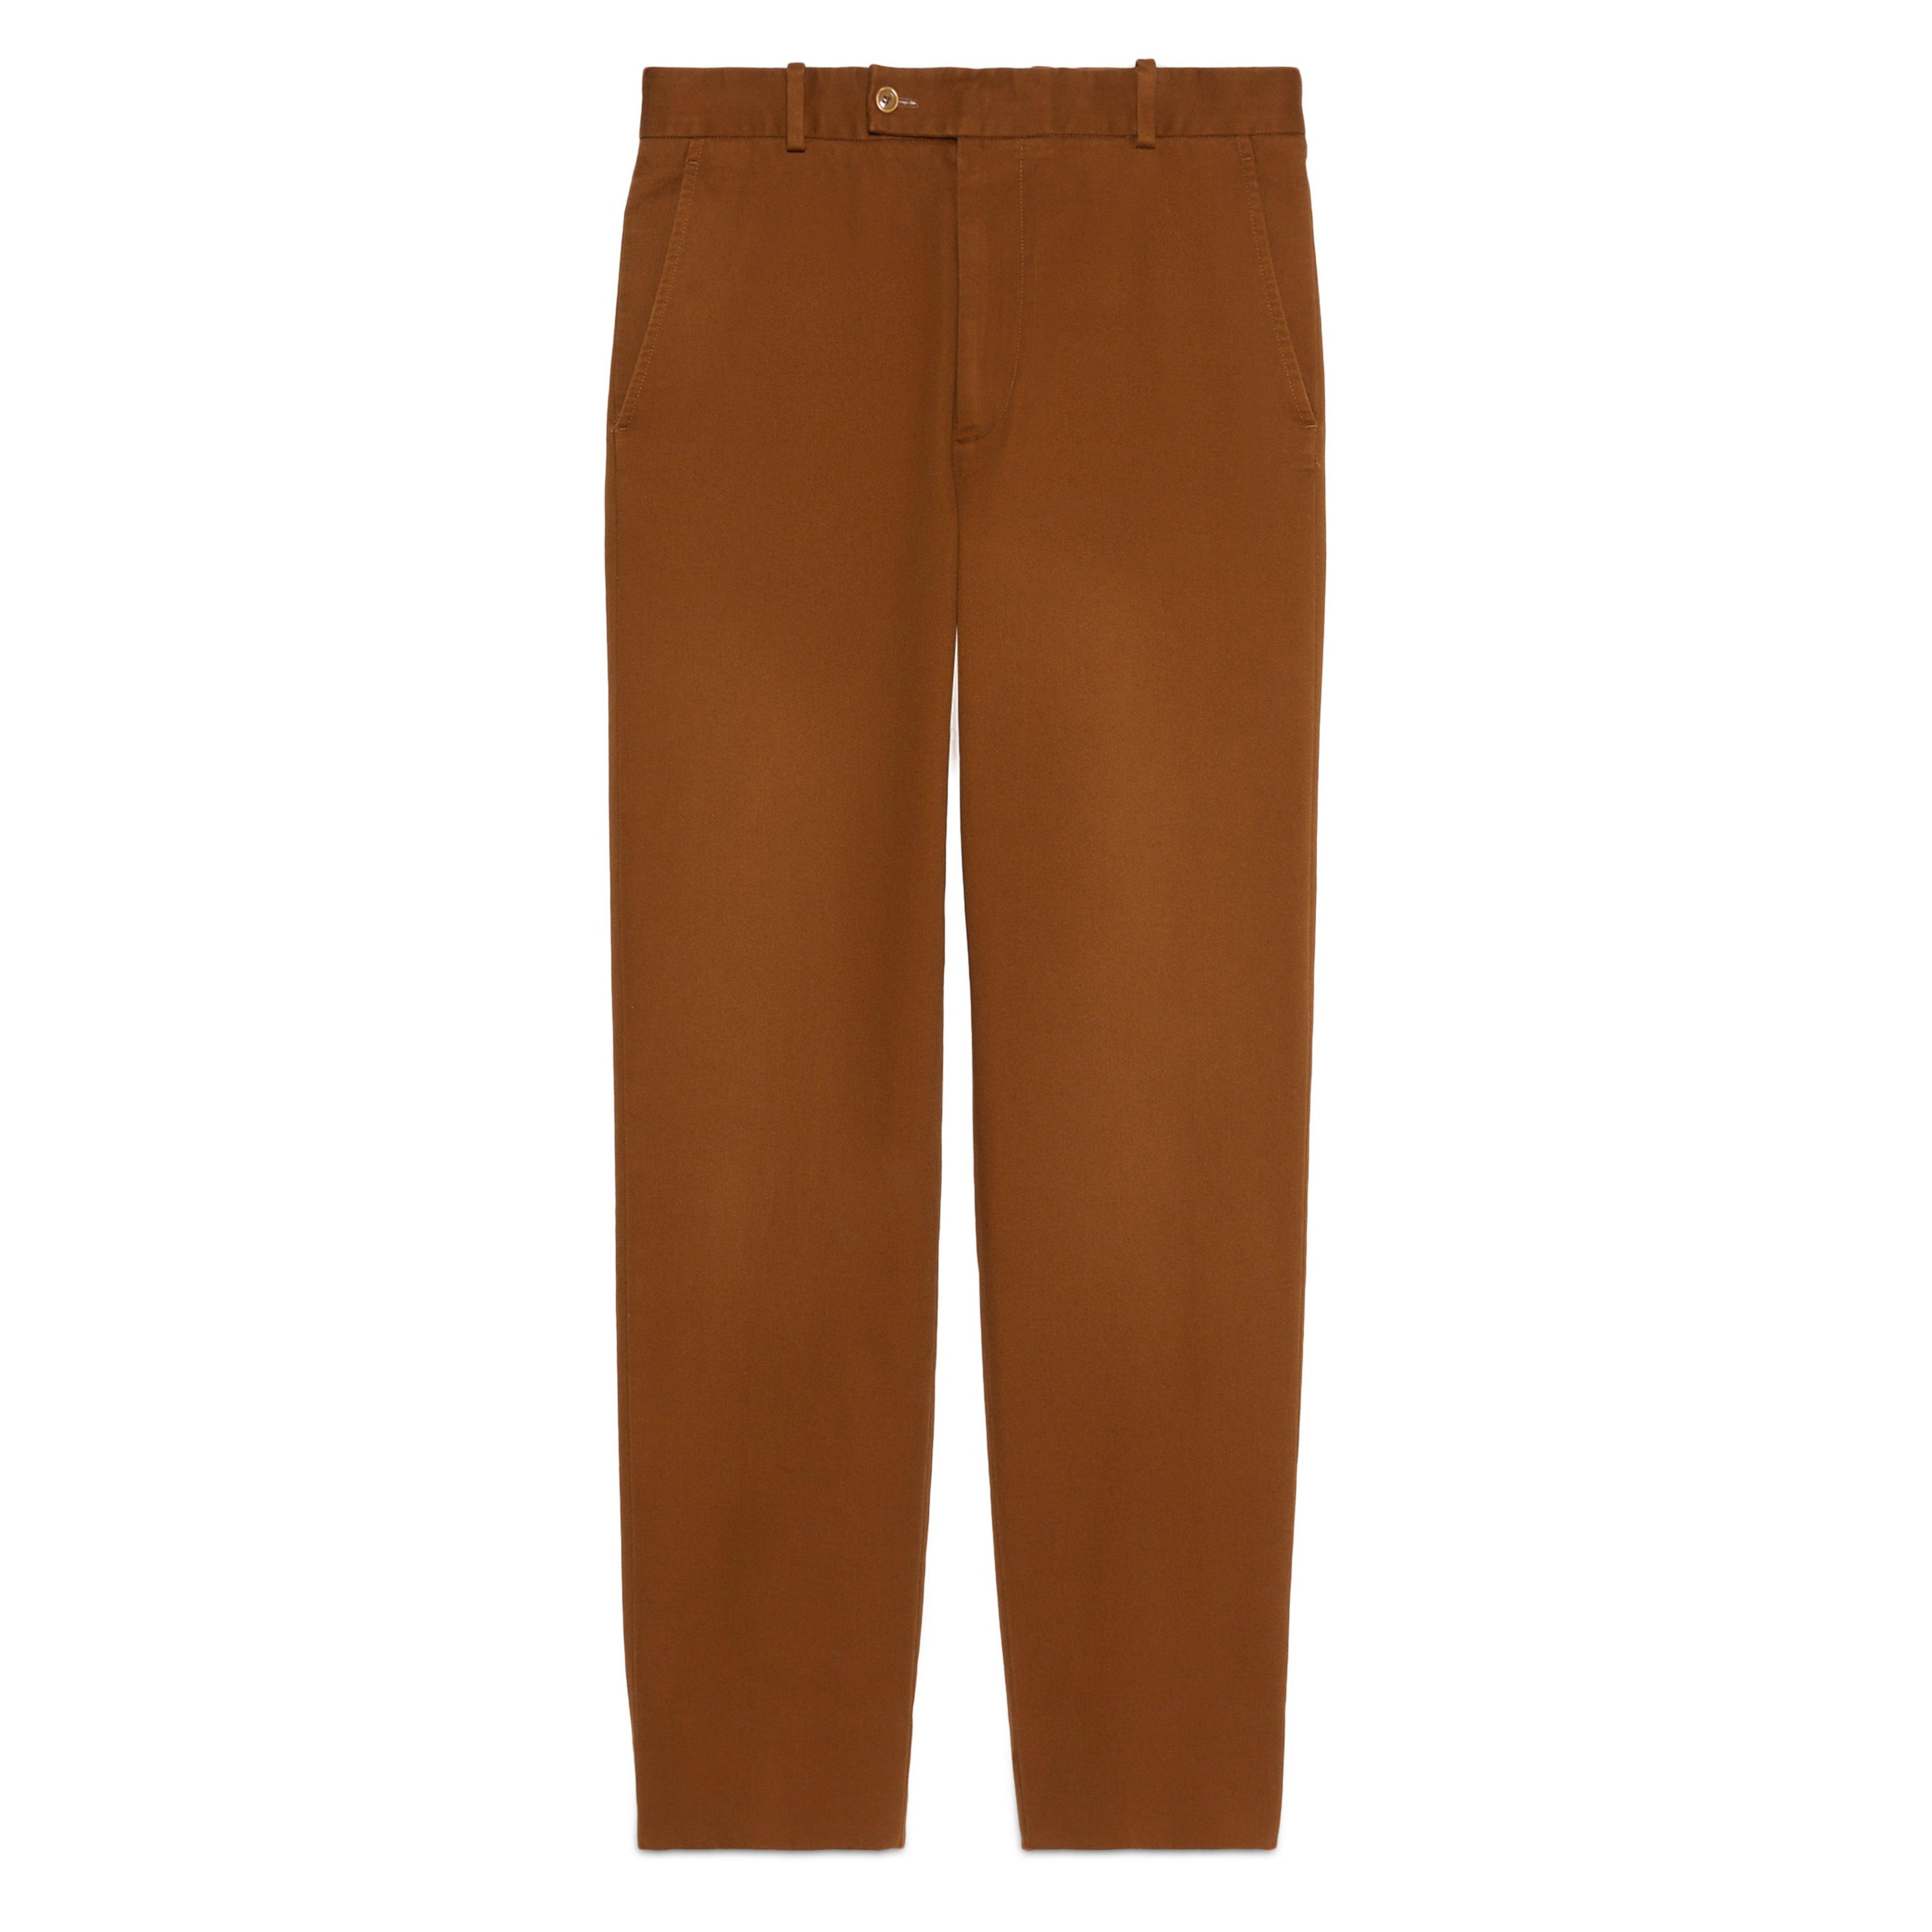 Gucci - Men's Cotton Drill Trouser - (Brown) by GUCCI